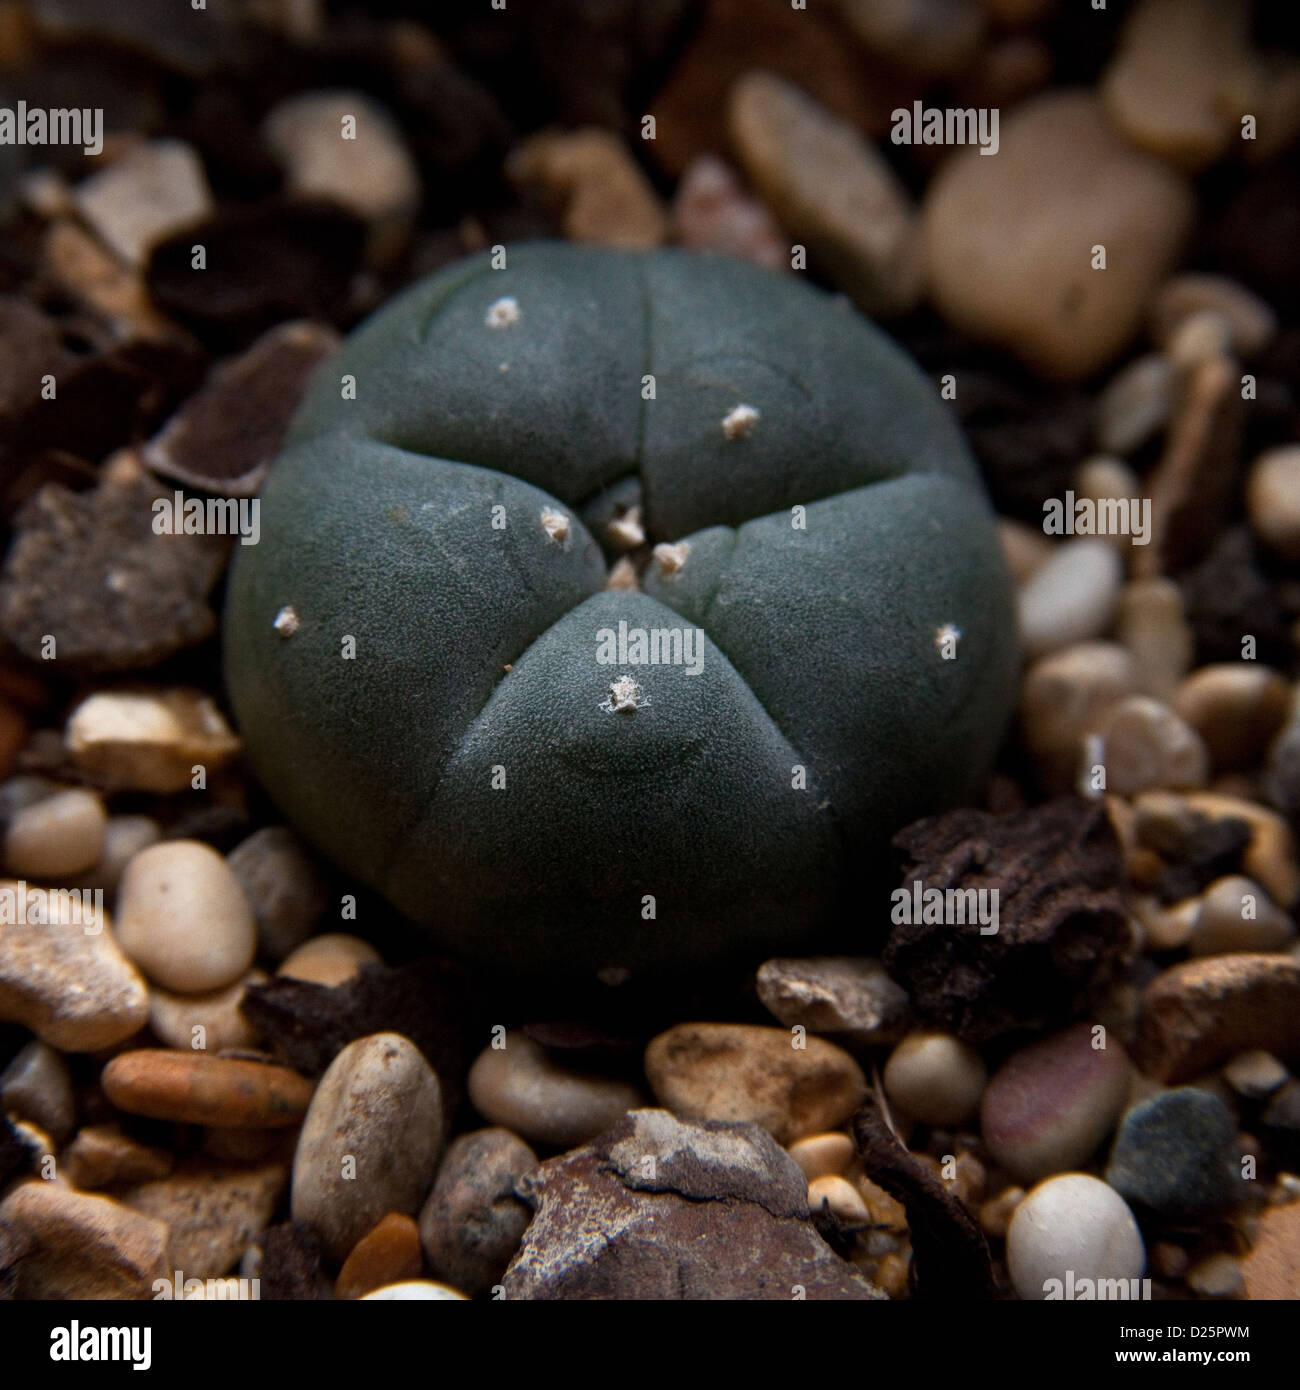 Peyote Kaktus (Lophophora Williamsii), der halluzinogene Droge Meskalin enthält. Stockfoto